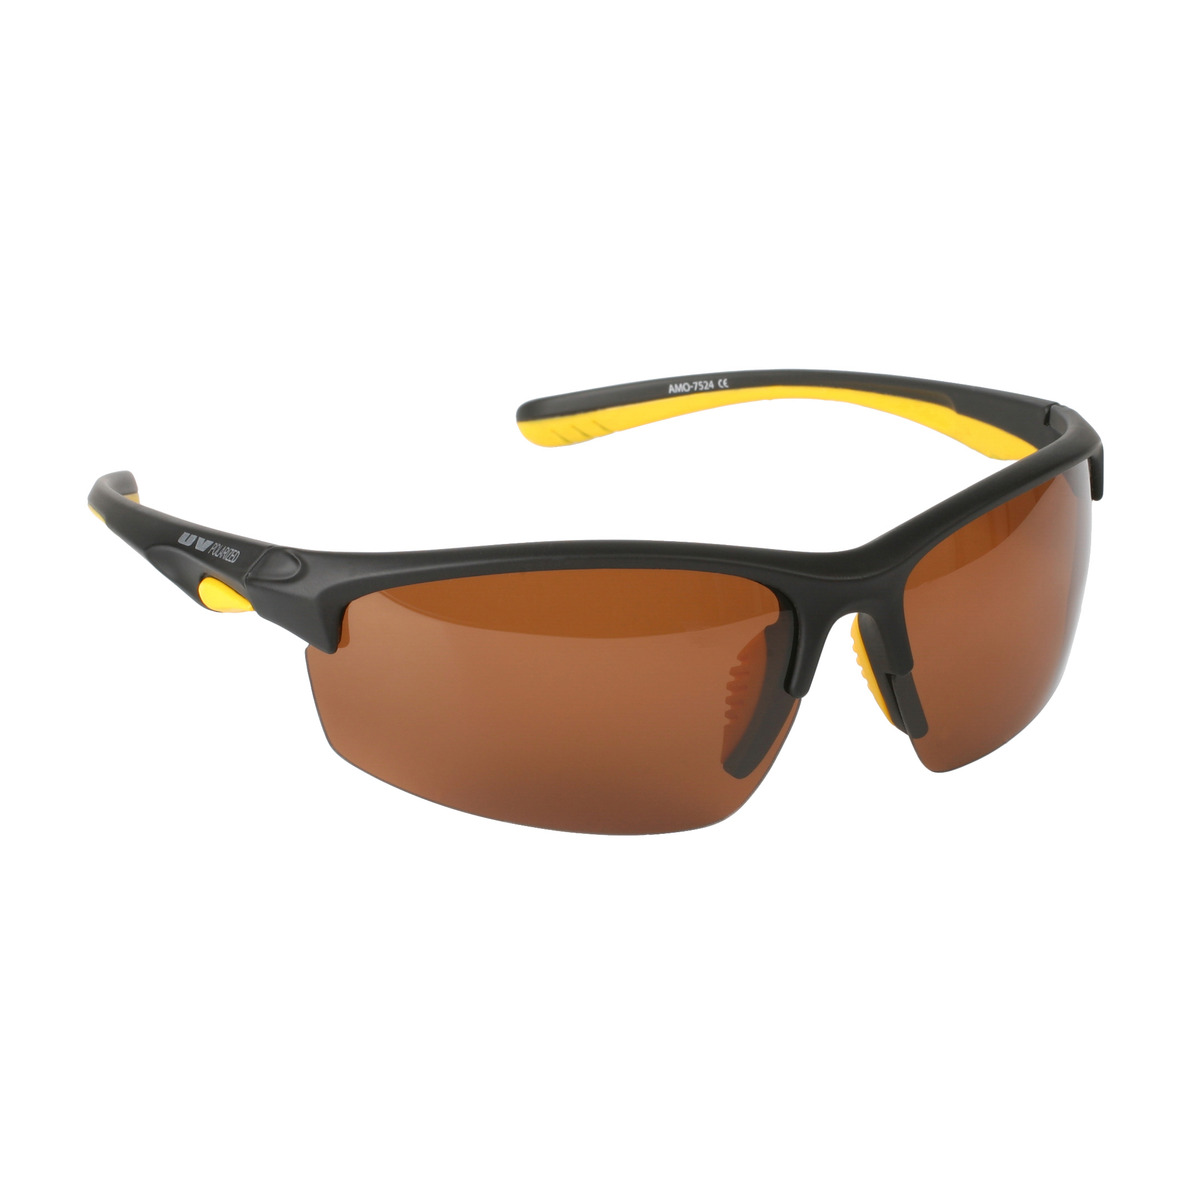 Mikado Sunglasses Polarized - 7524 BROWN